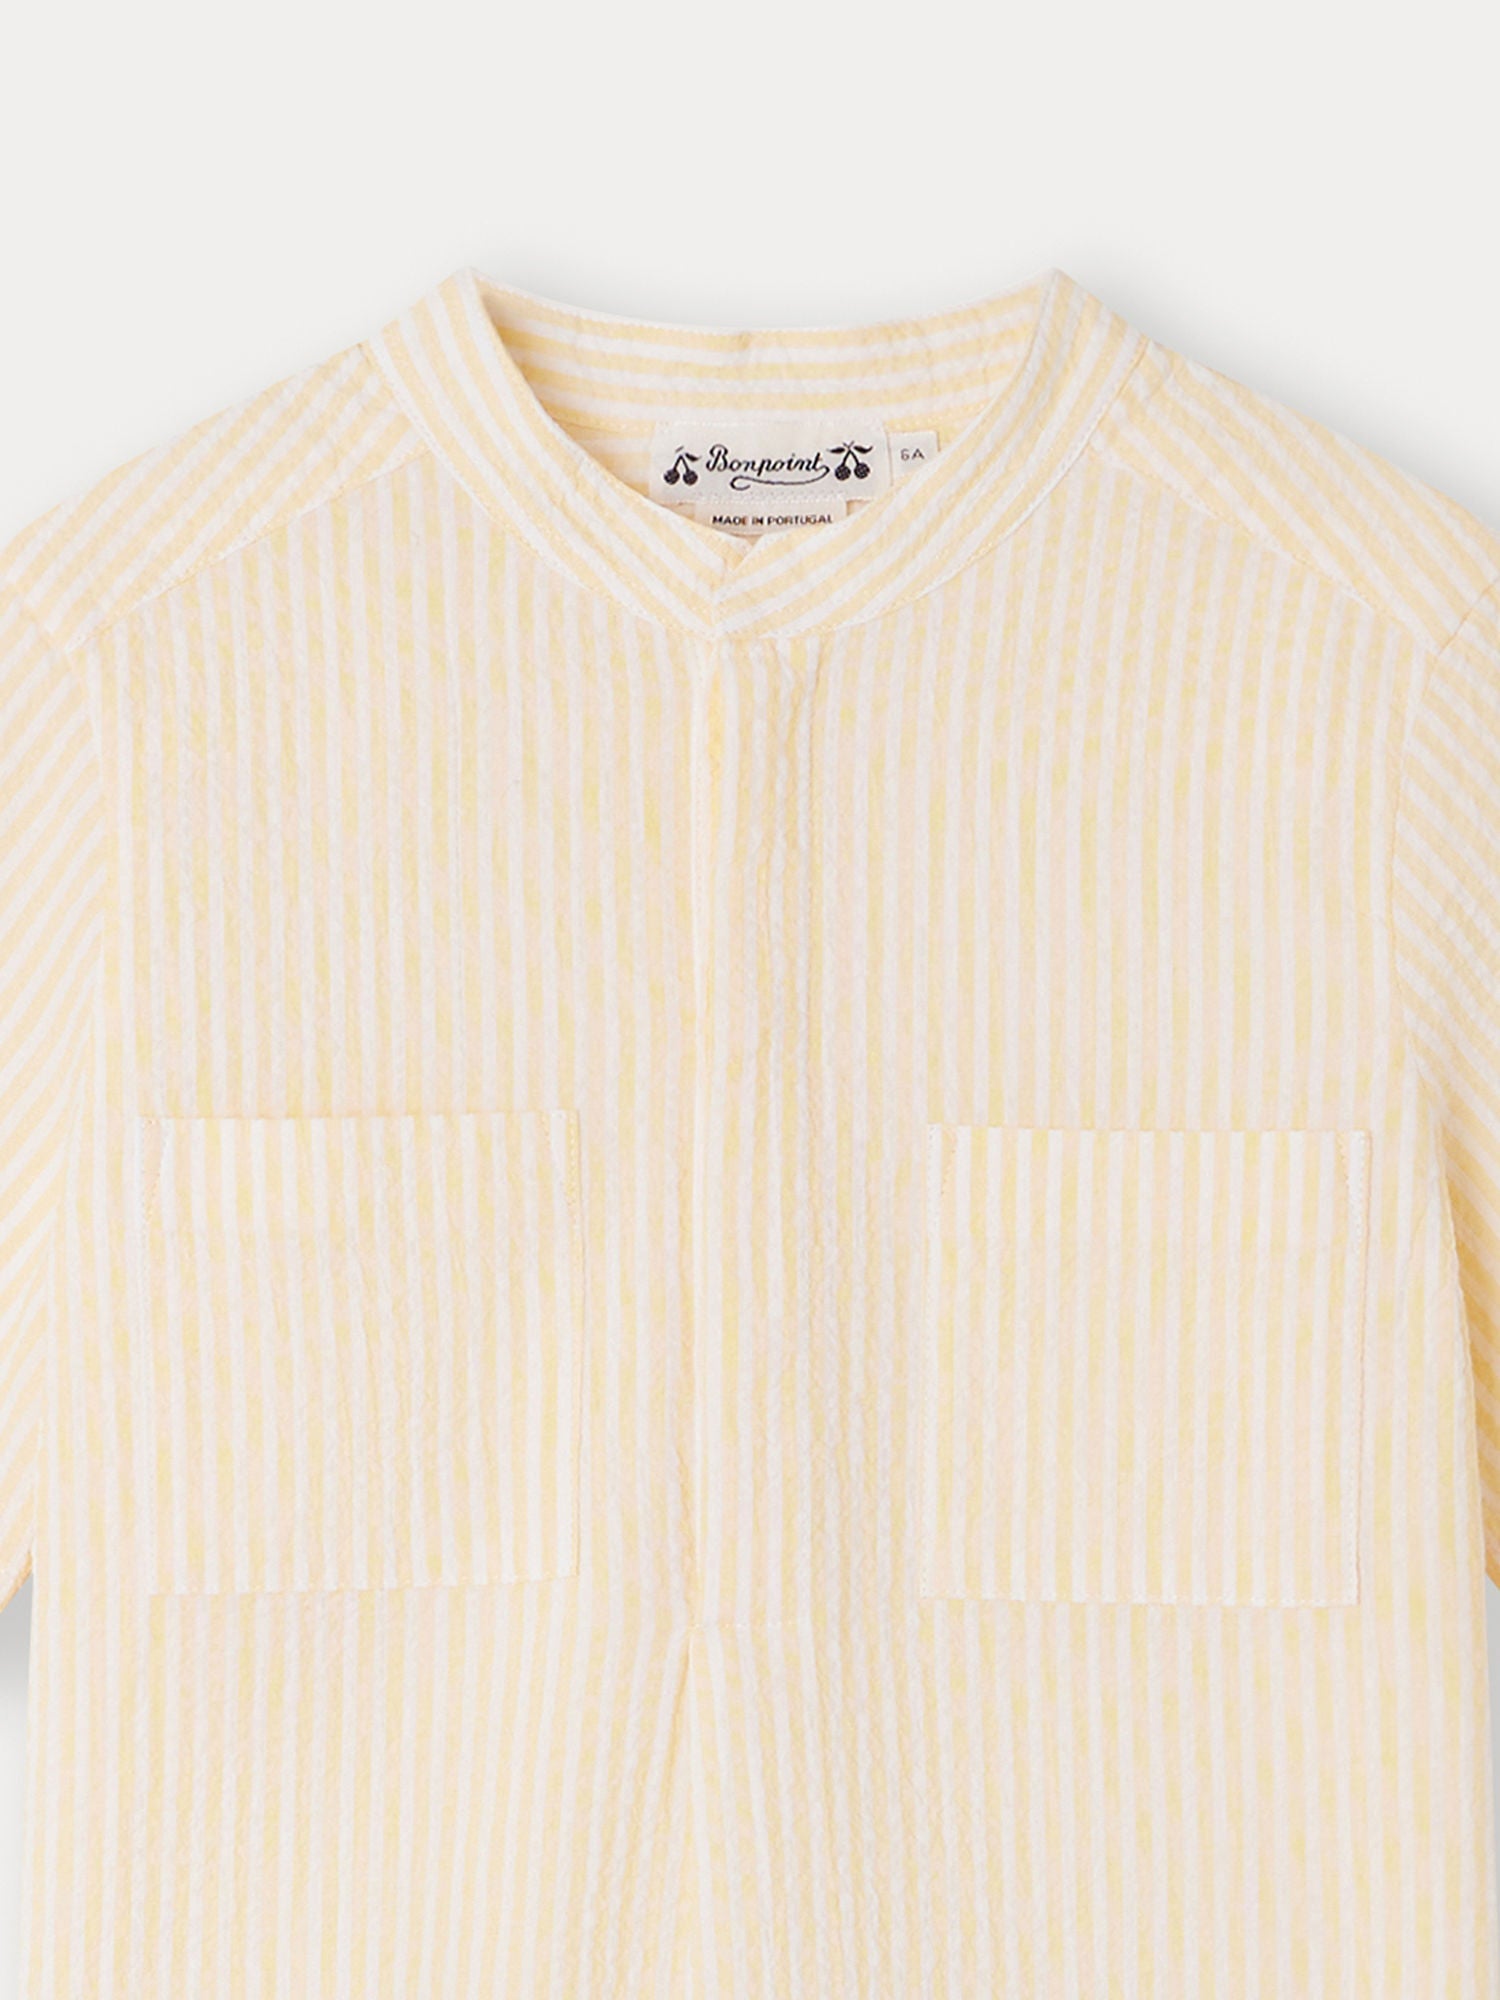 Boys Yellow Stripes Cotton Shirt